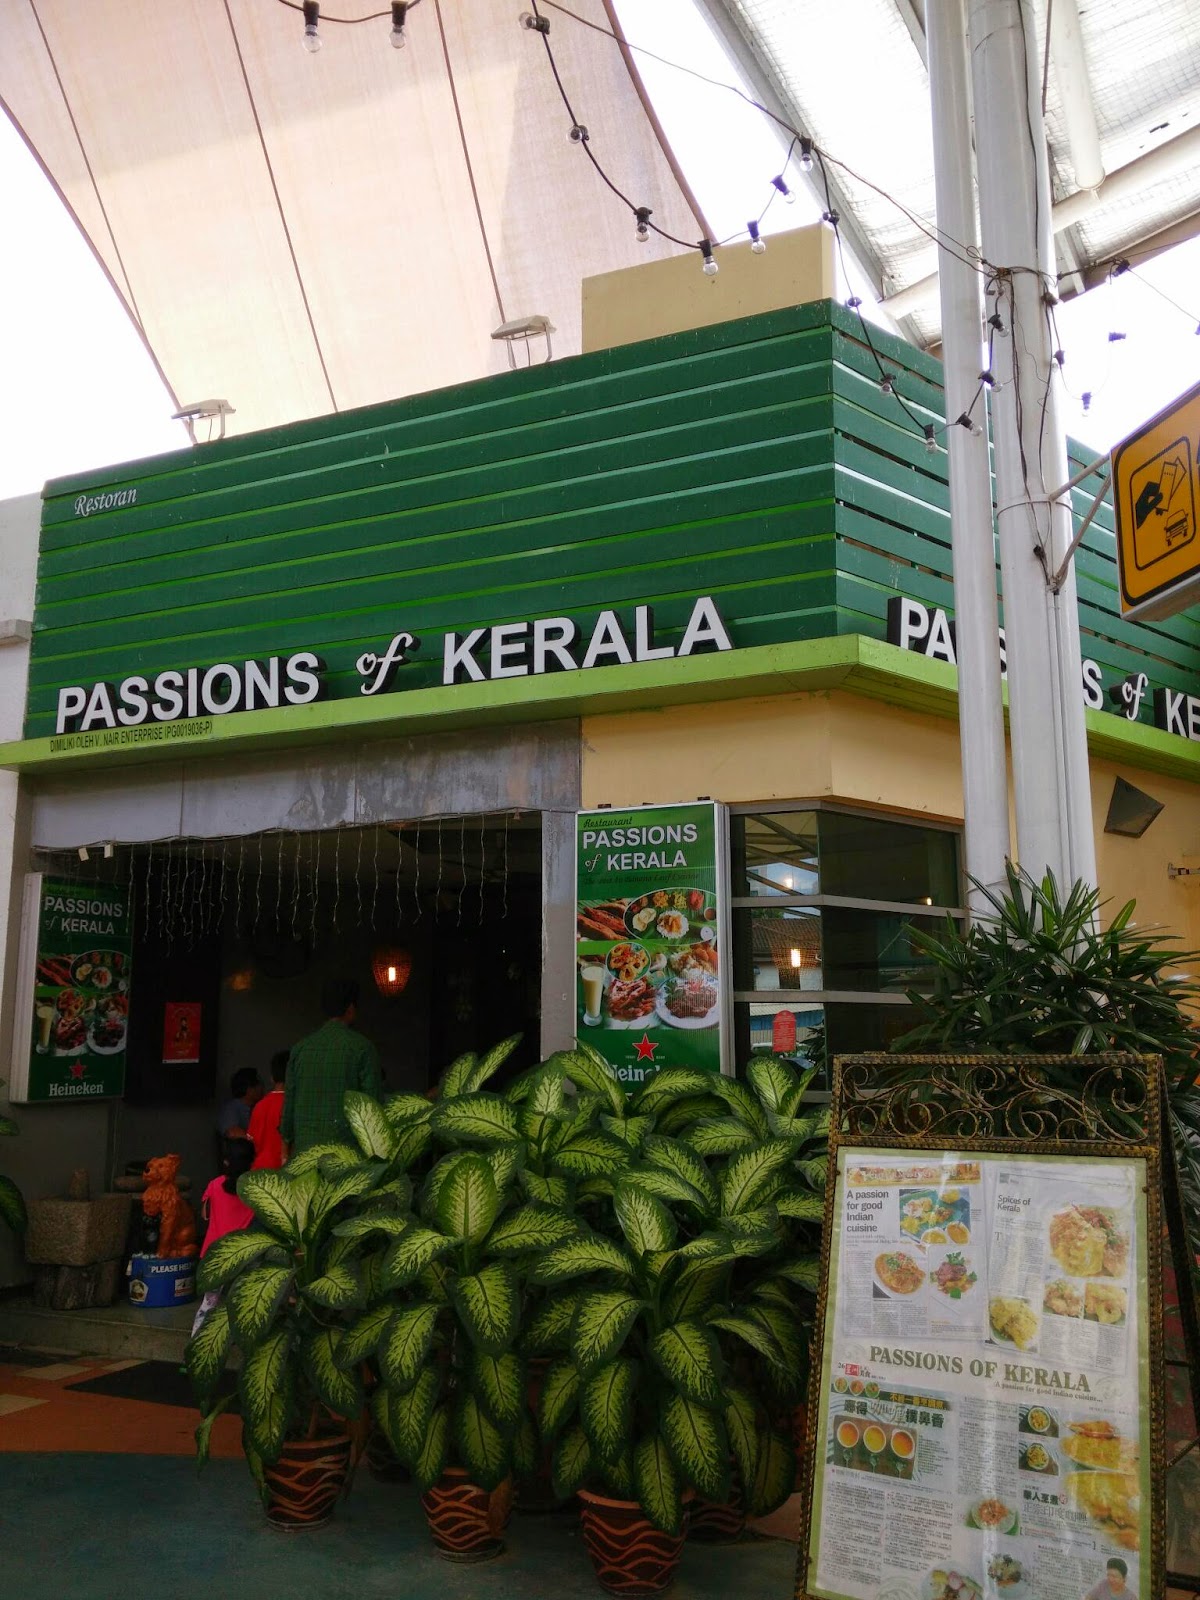 Passion of kerala